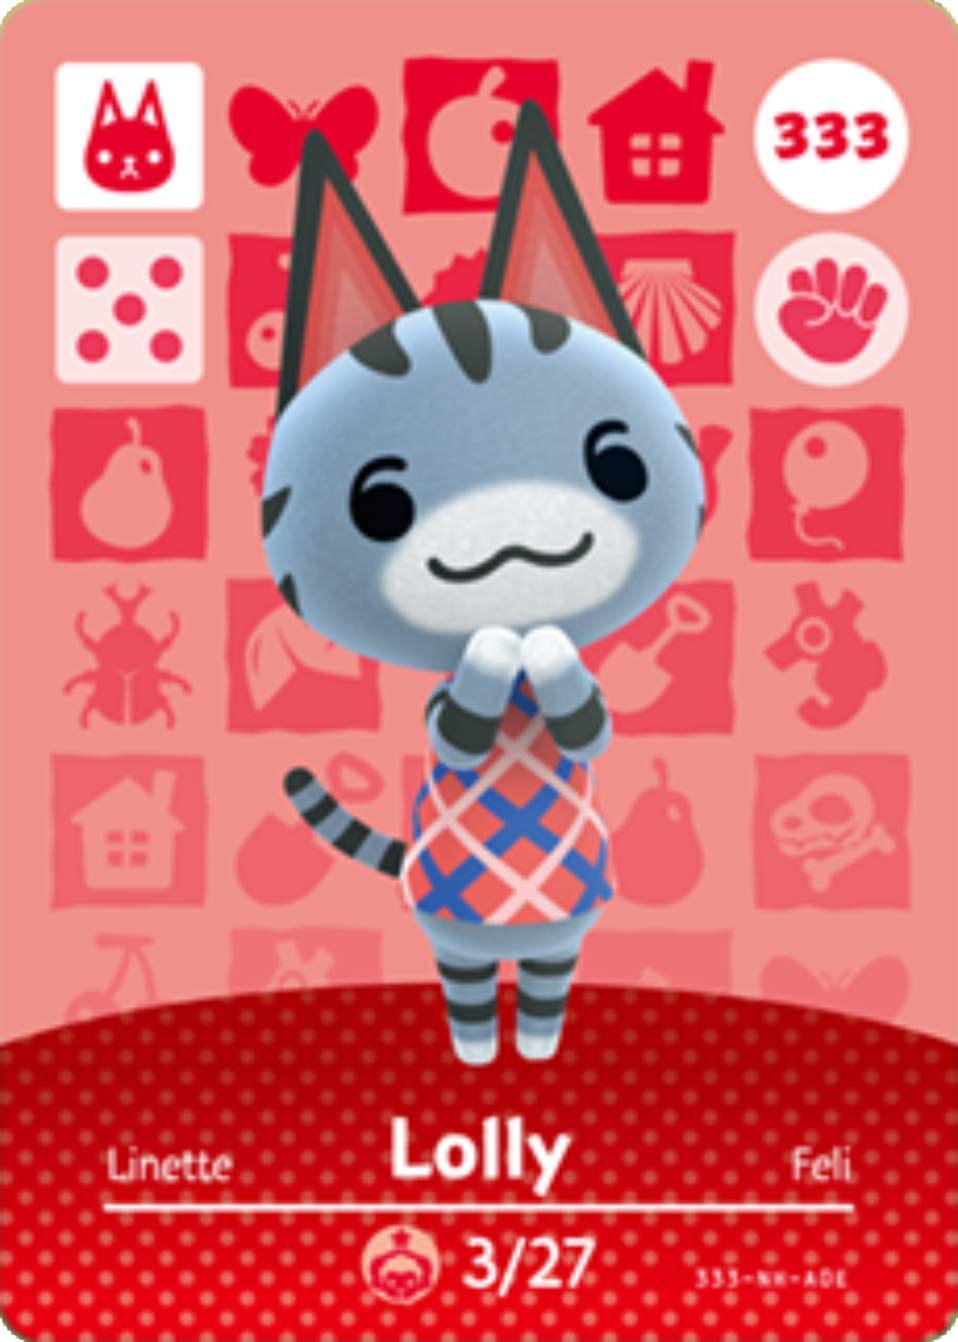  [AUSTRALIA] - Lolly - Nintendo Animal Crossing Happy Home Designer Series 4 Amiibo Card - 333